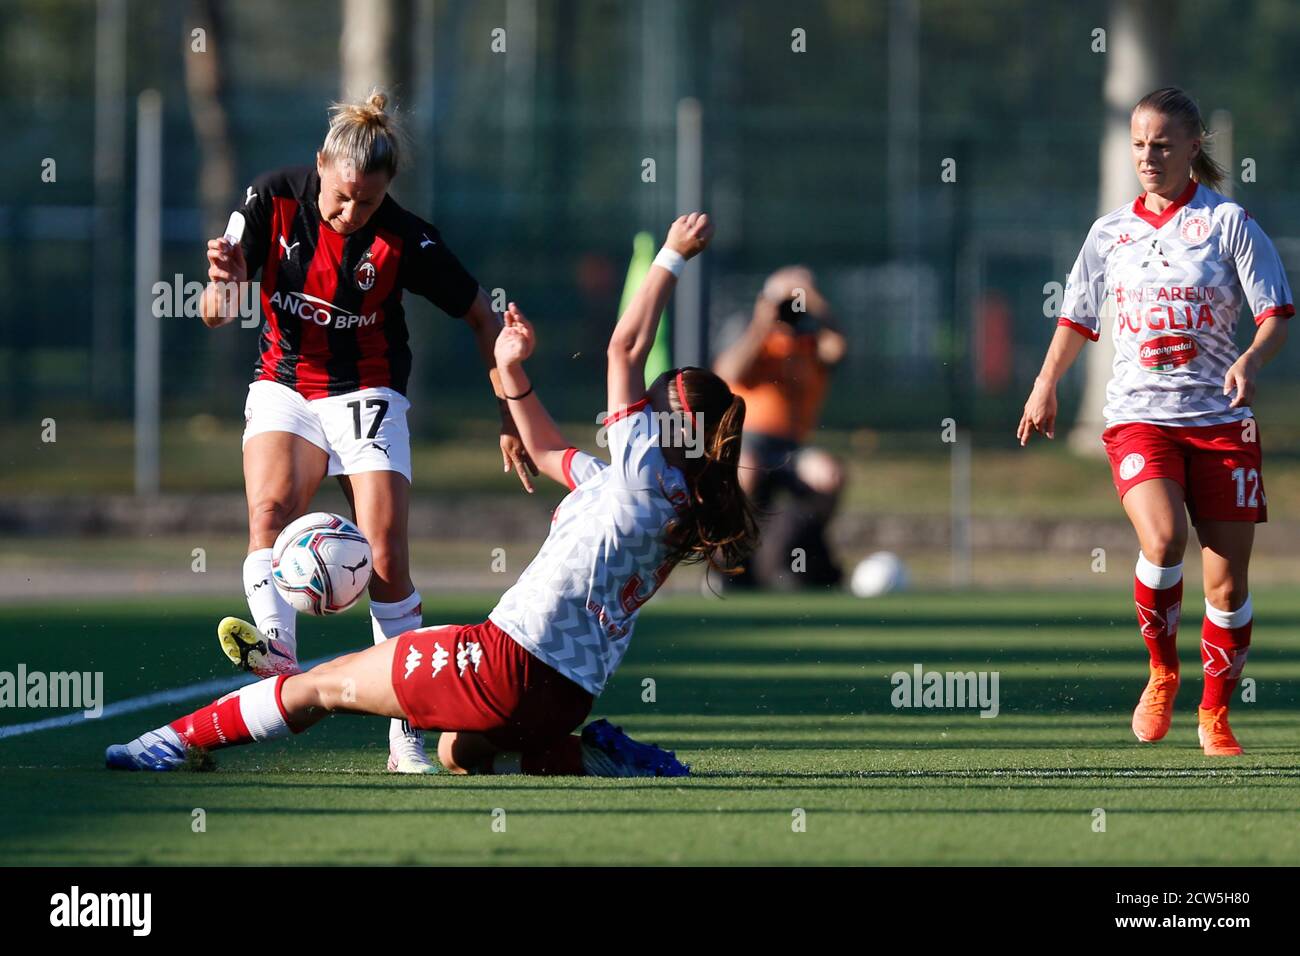 Dominica Conc (AC Milan) during AC Milan vs Pink Bari, Italian Soccer Serie A Women Championship, Milan, Italy, 05 Sep 2020 Stock Photo